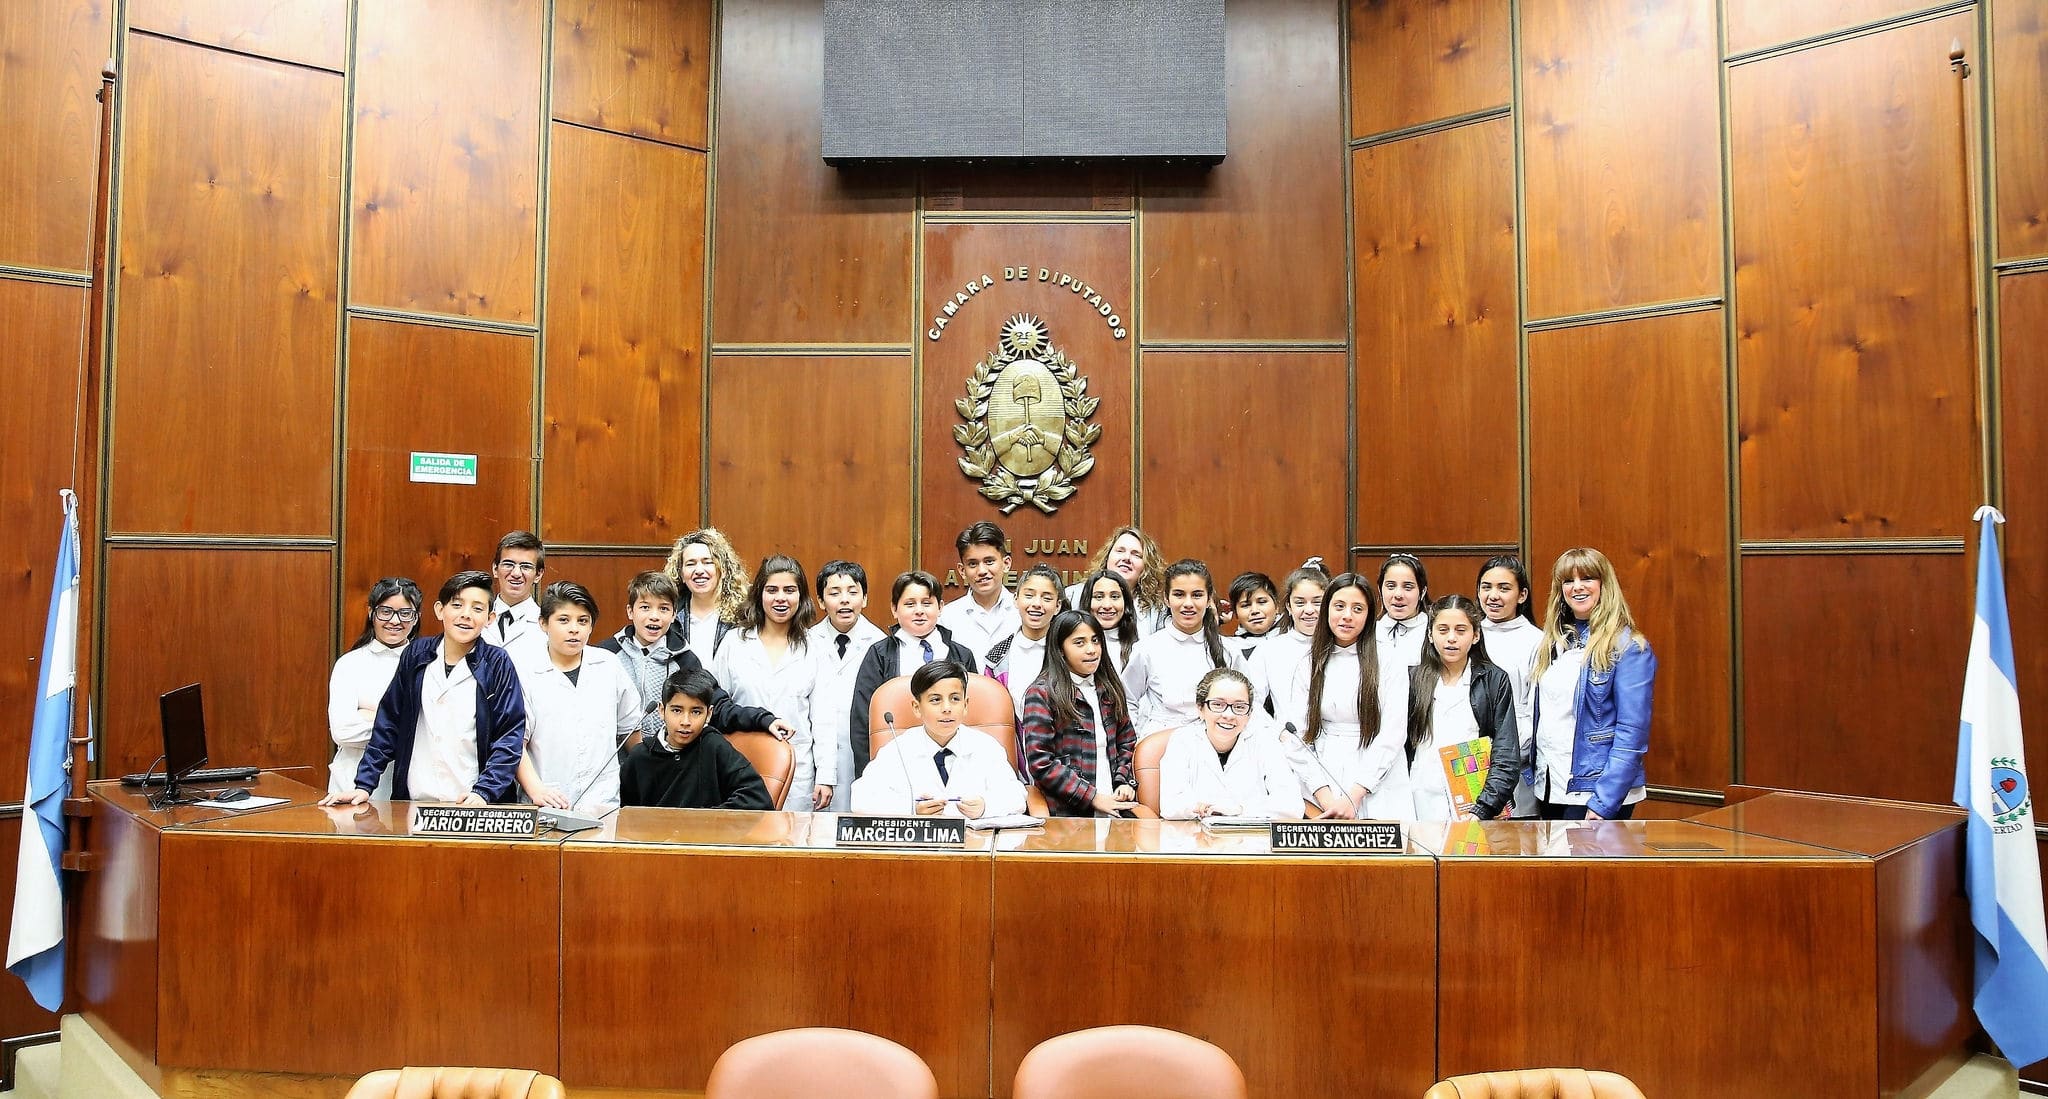  La escuela “San Juan de la Frontera” conoció el Poder Legislativo.